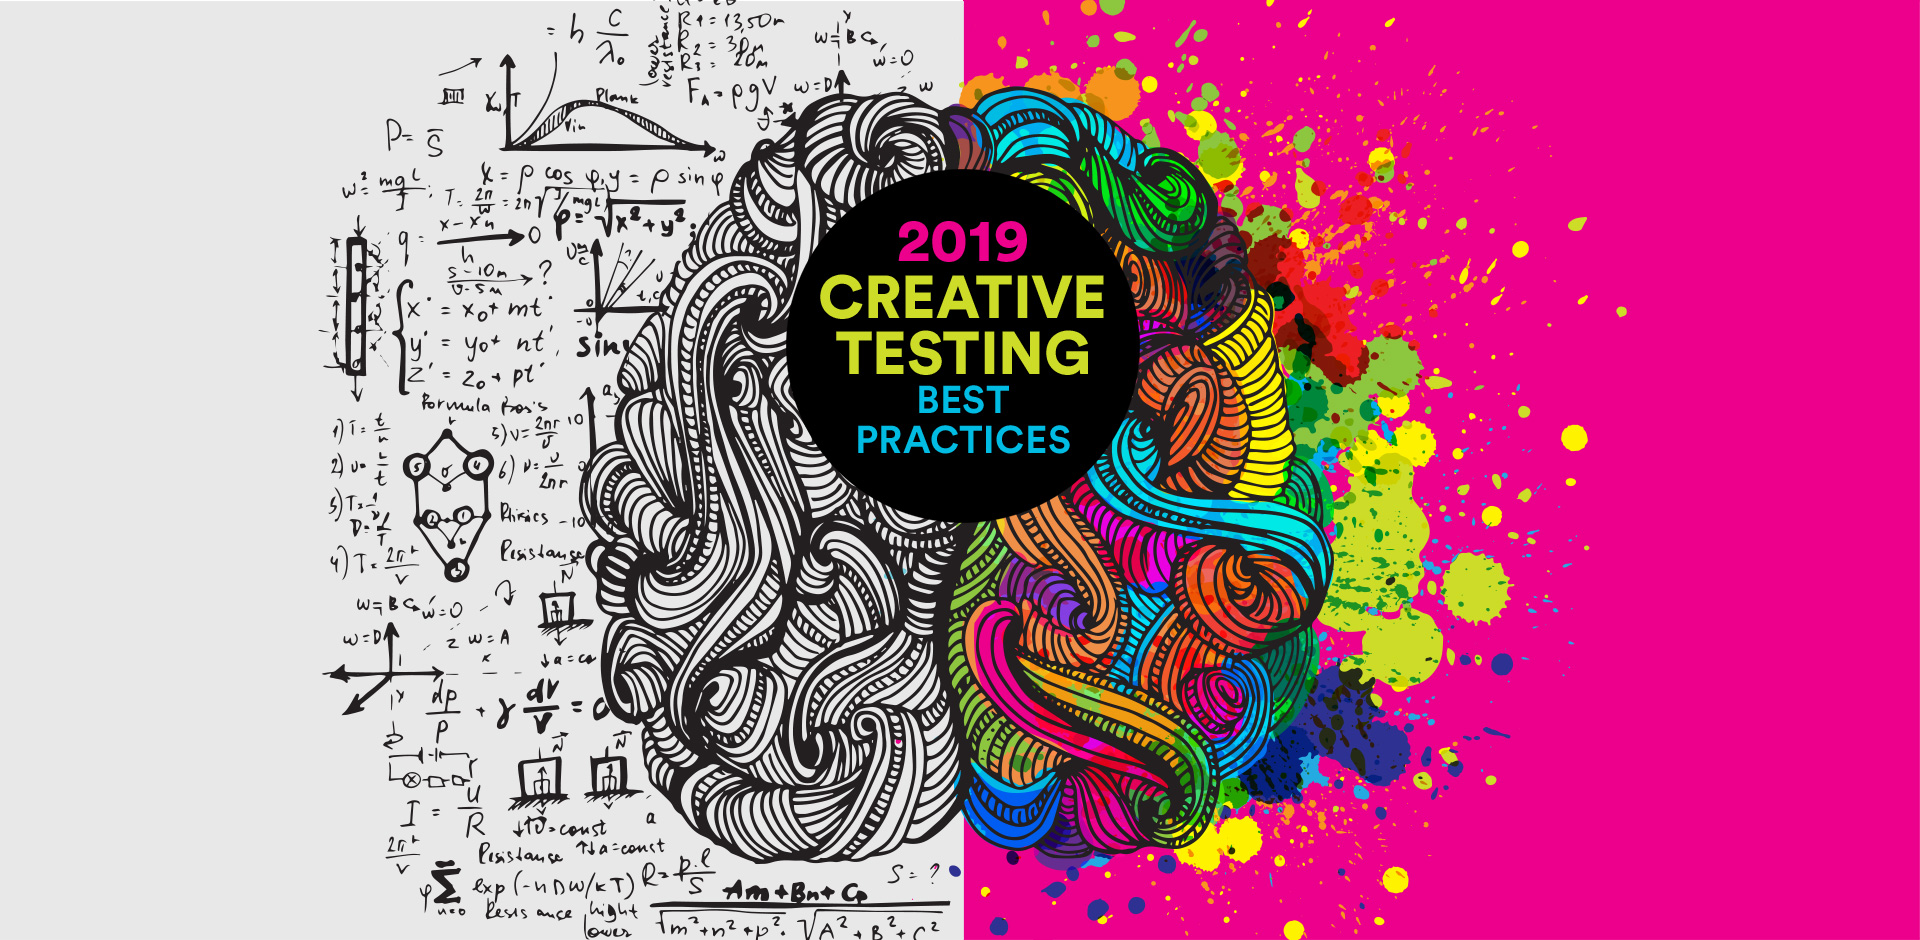 2019 Creative Testing Best Practices